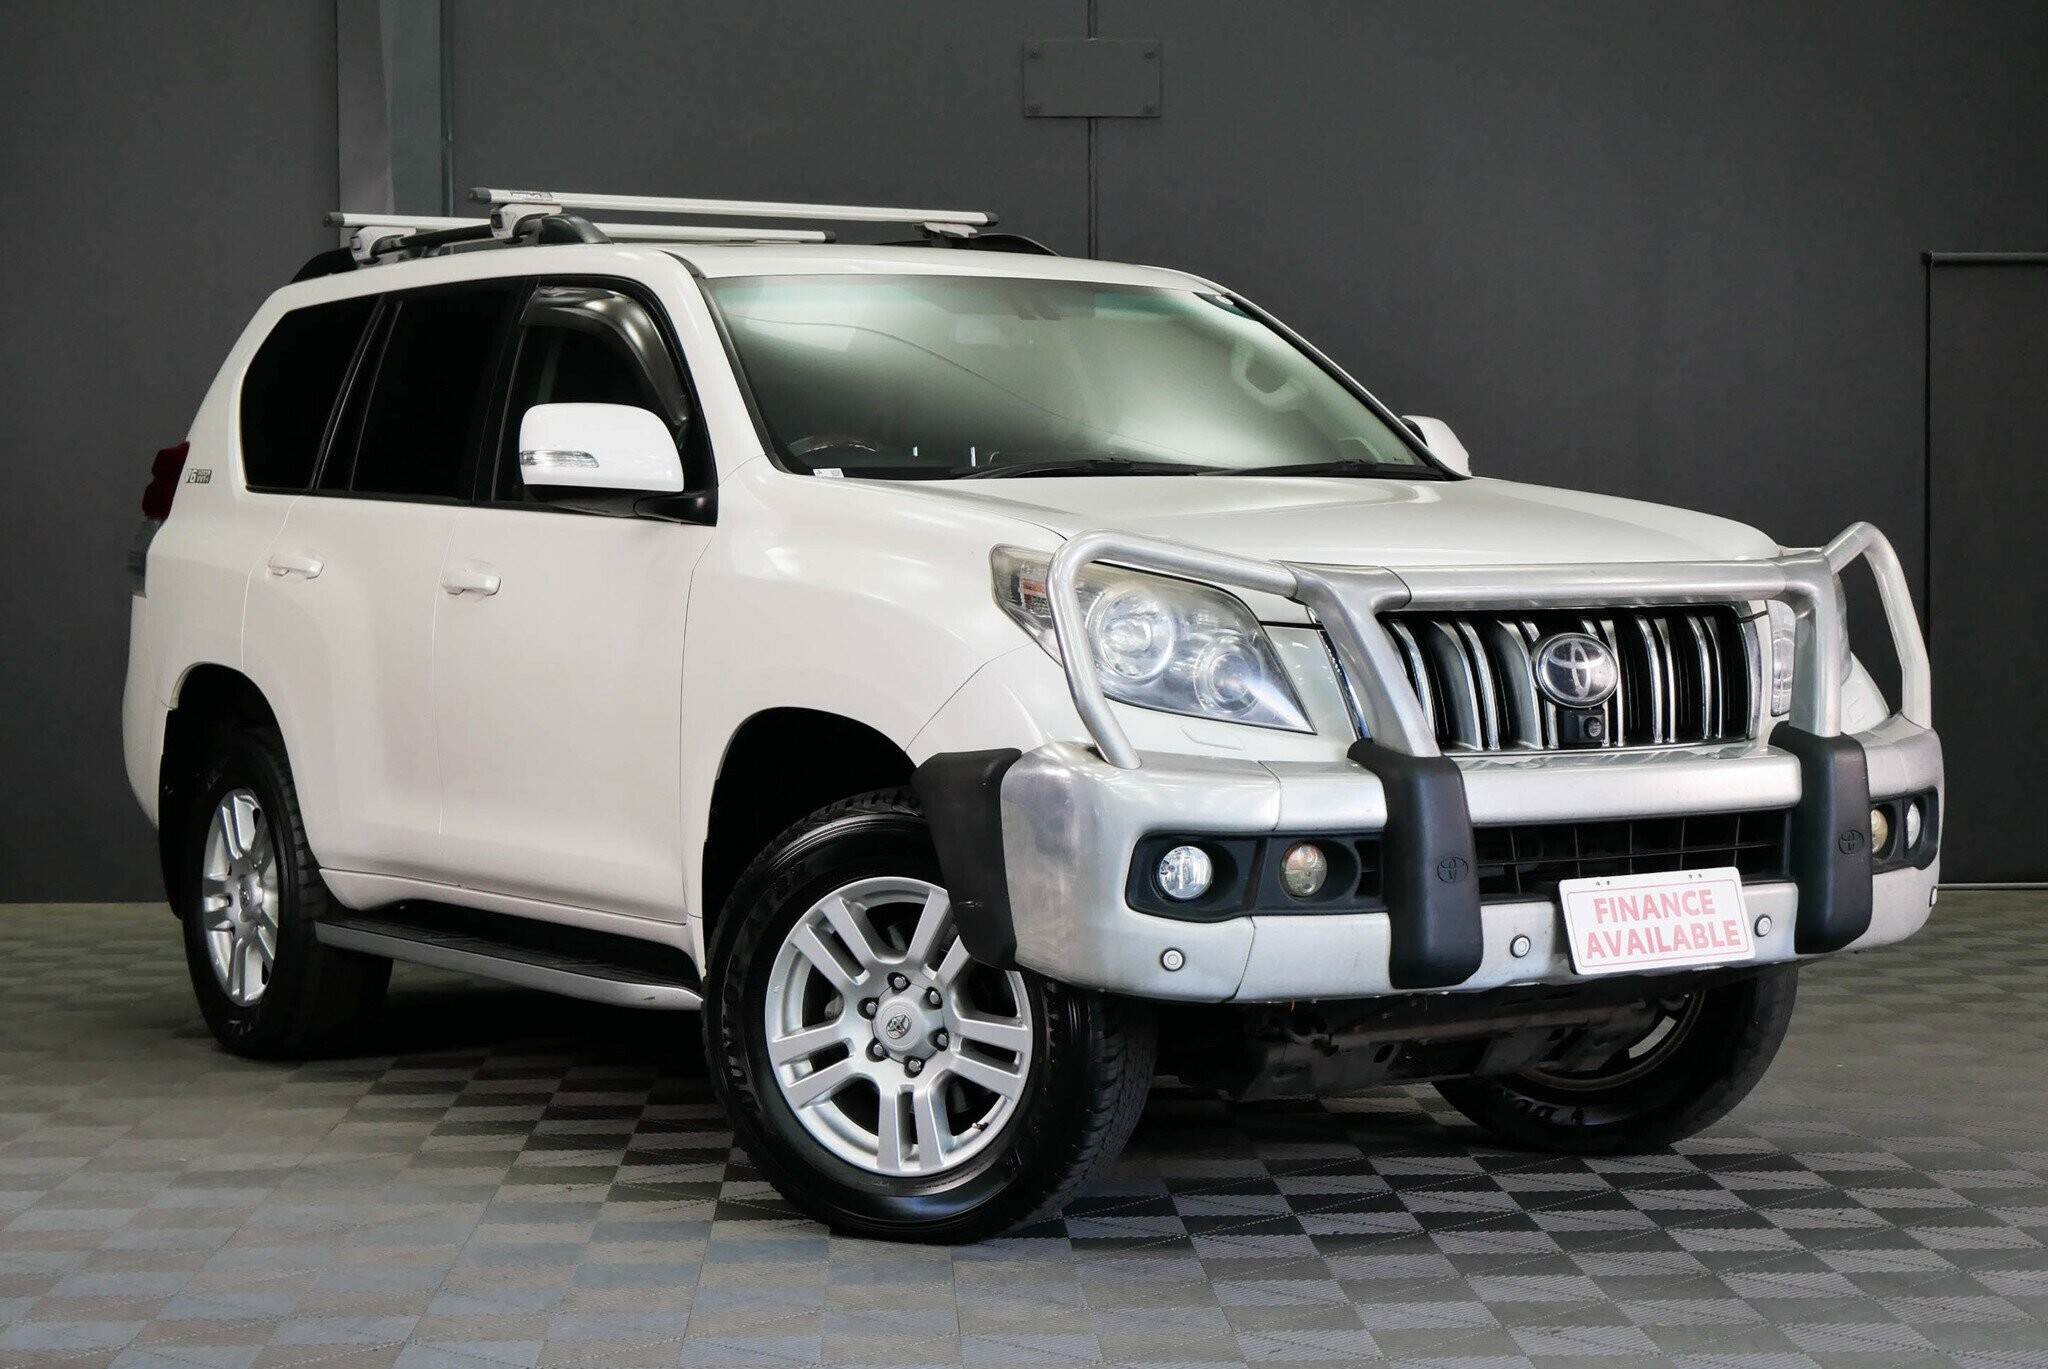 Toyota Landcruiser Prado image 1